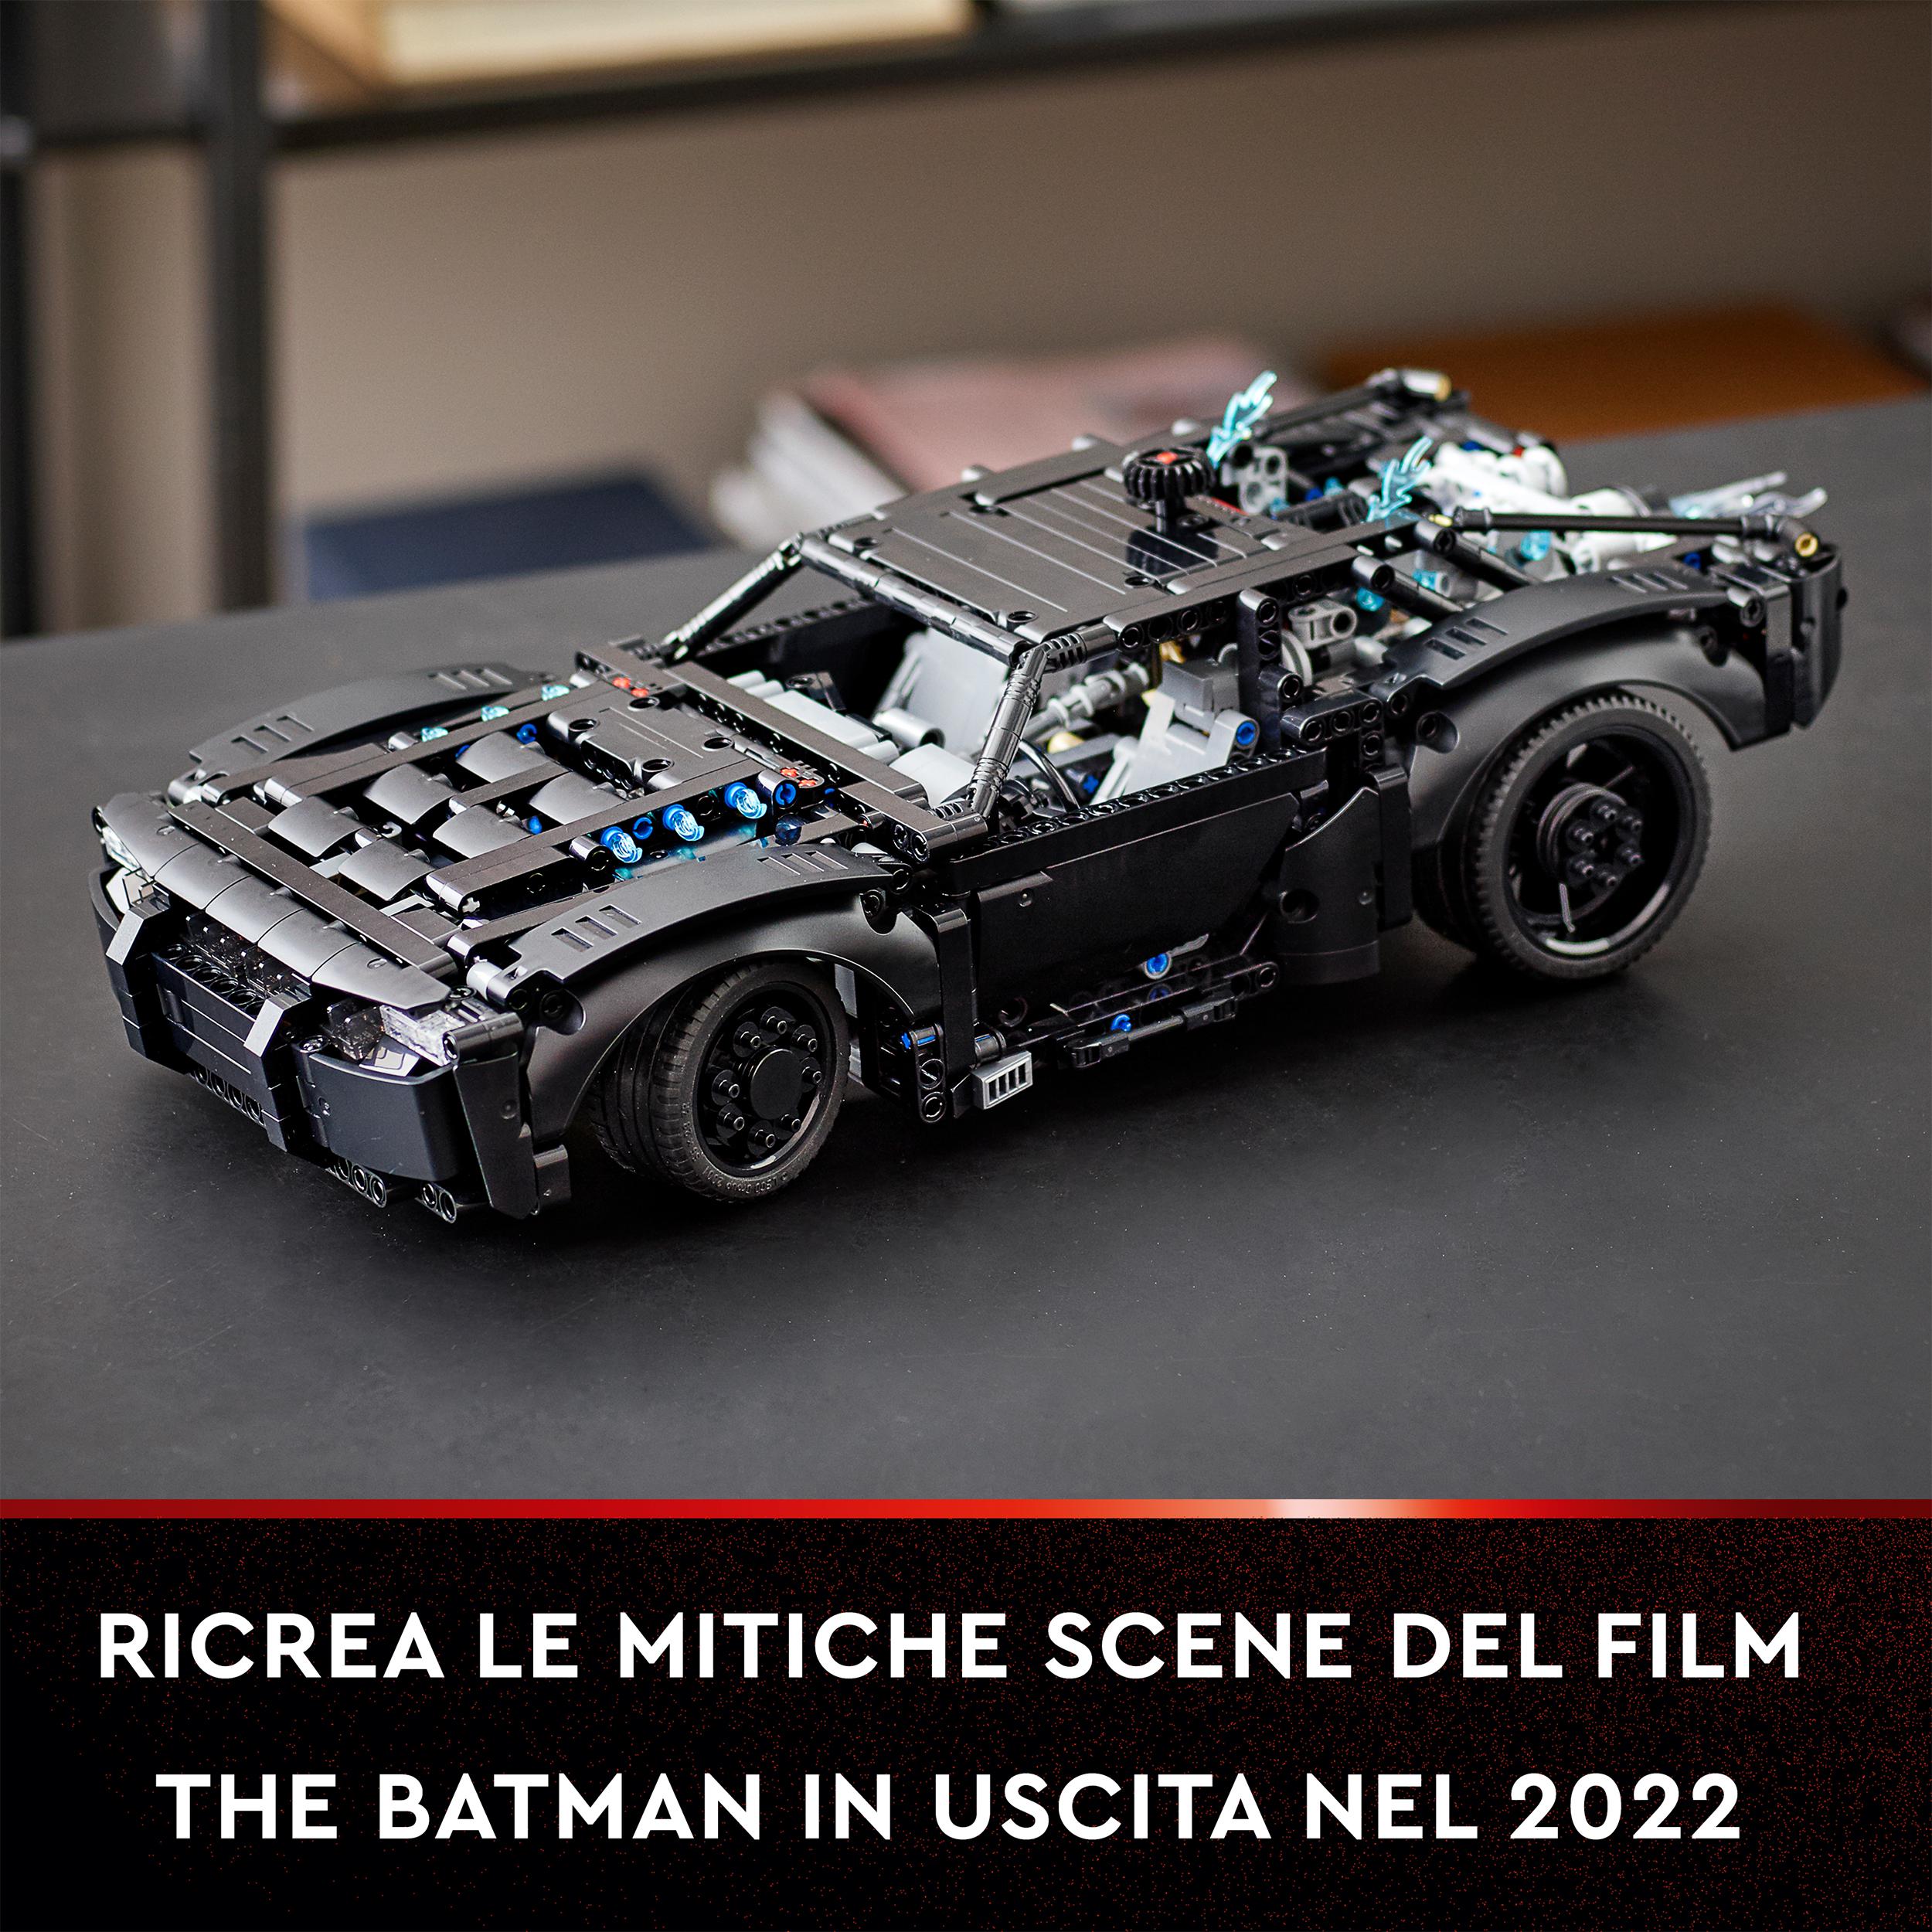 LEGO Technic BATMOBILE DI BATMAN 42127 42127, , large